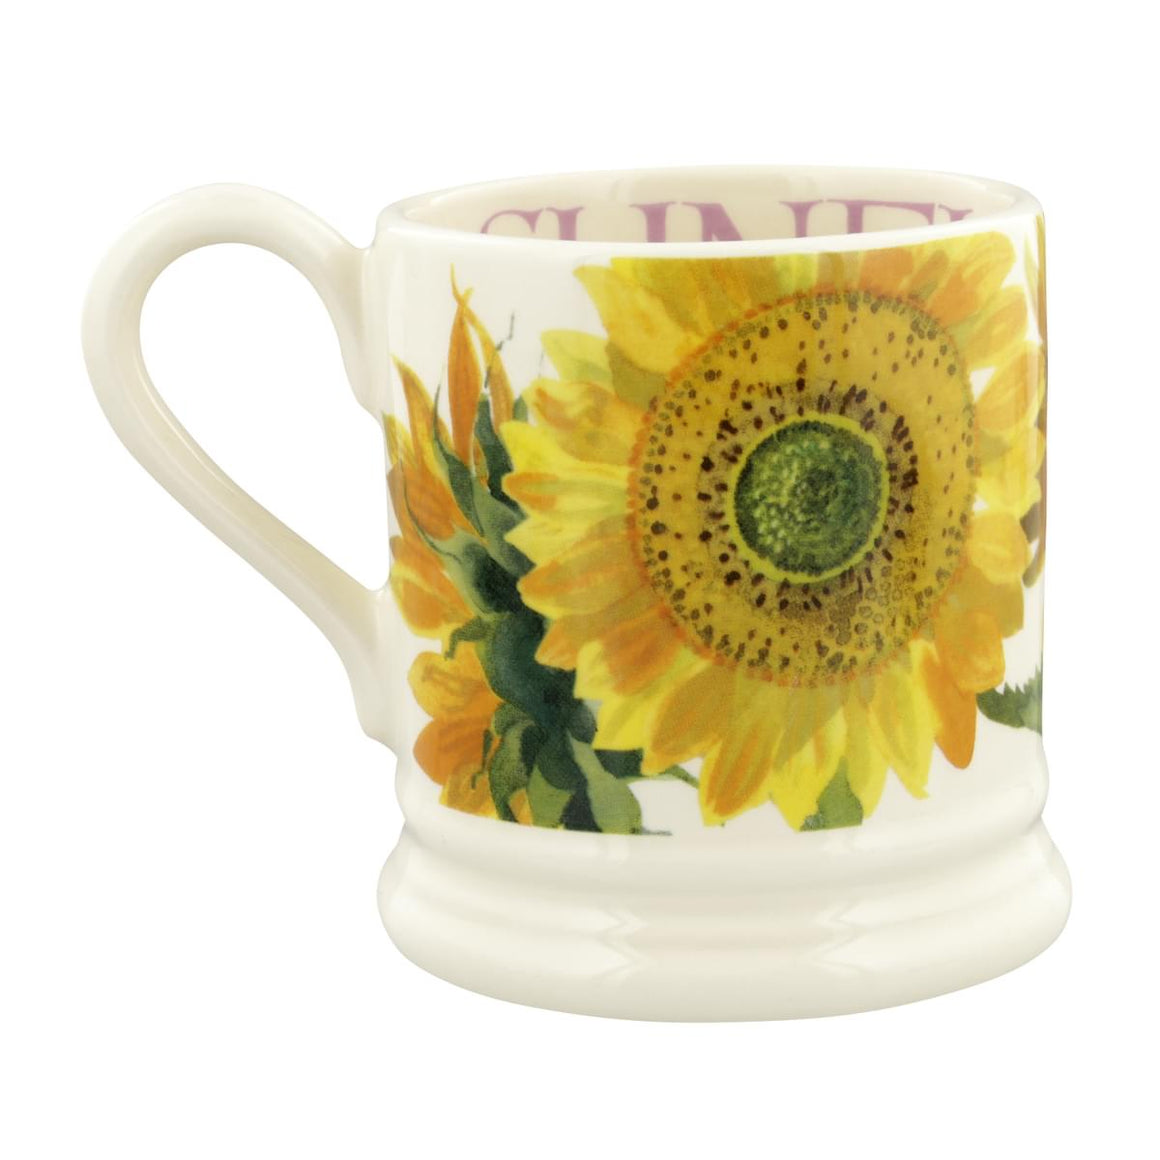 Emma Bridgewater Sunflower Half Pint Mug